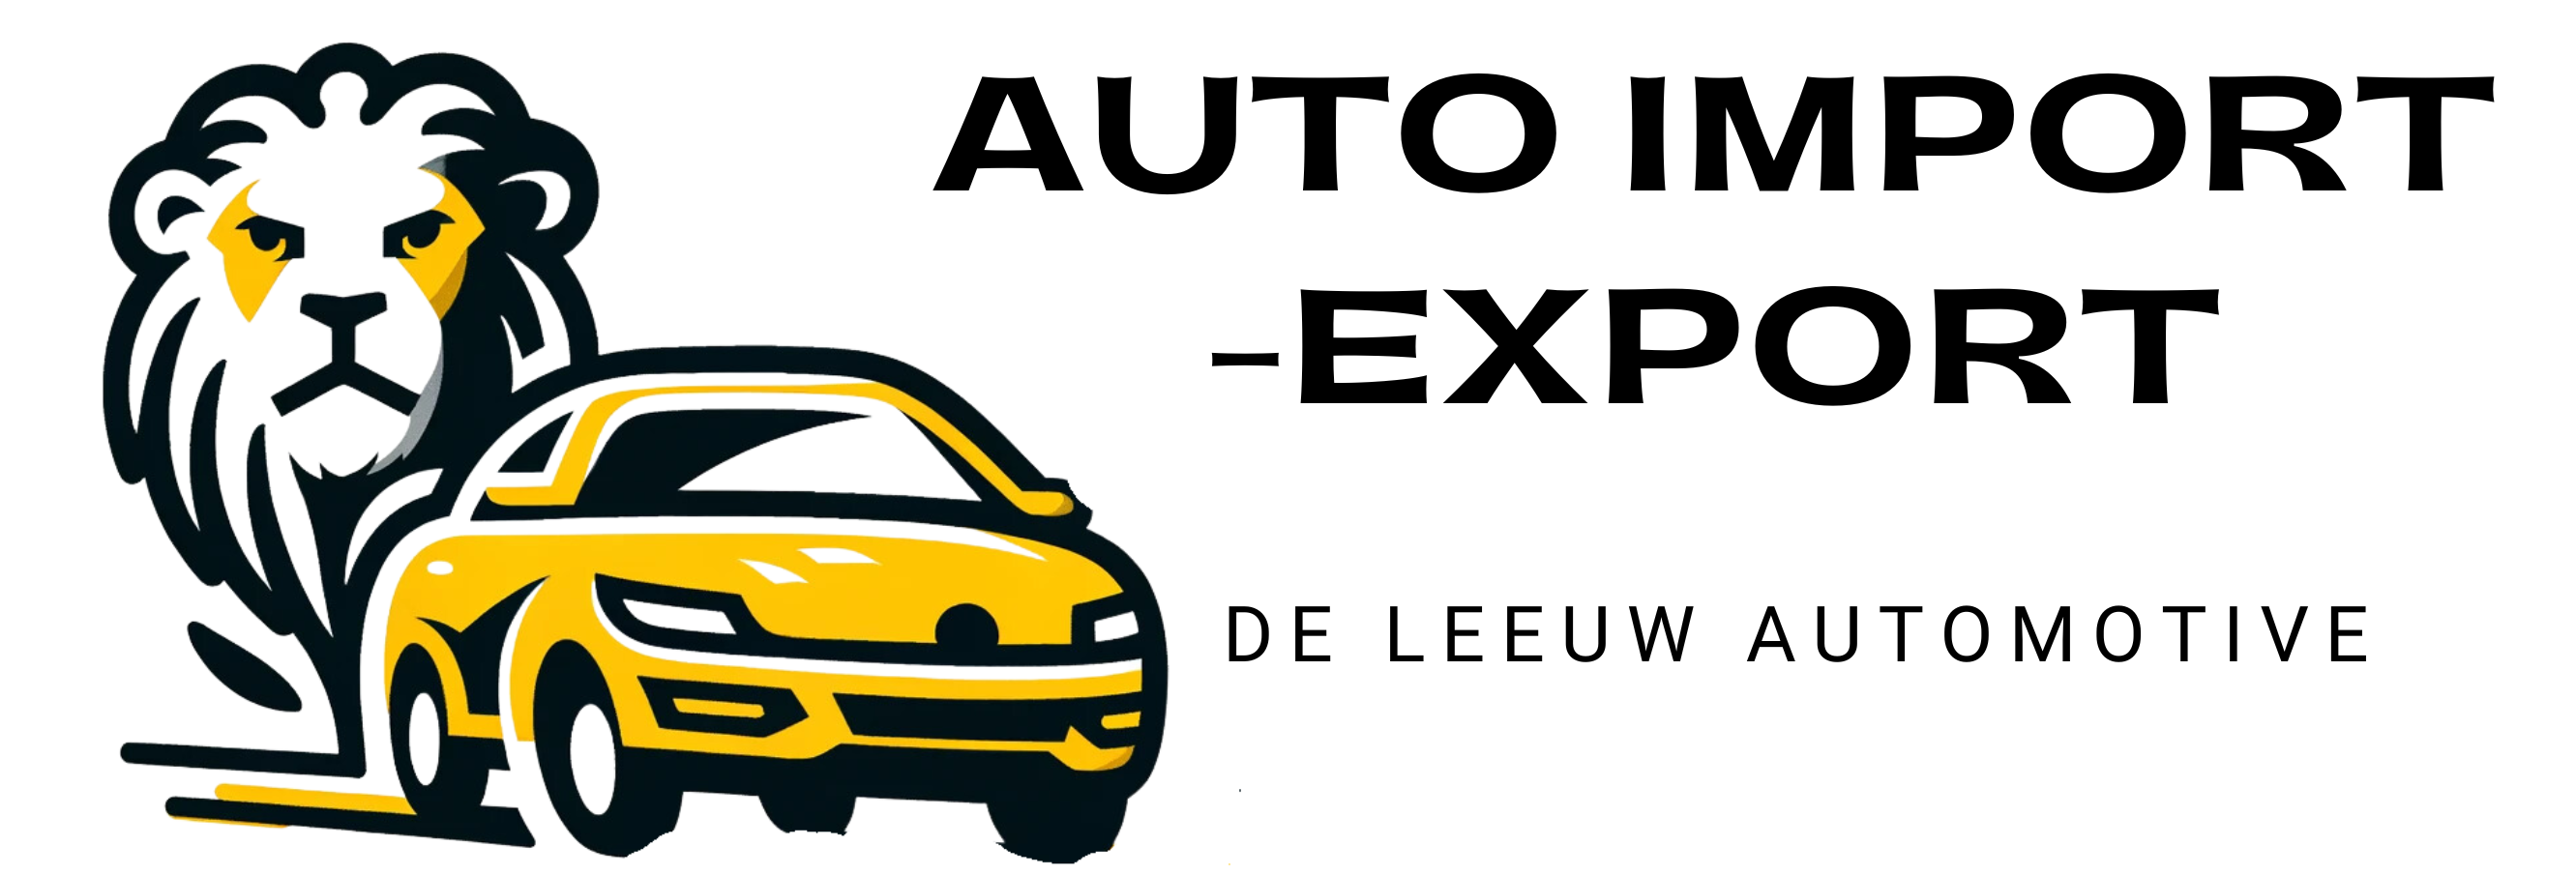 Auto import - export logo - De Leeuw automotive